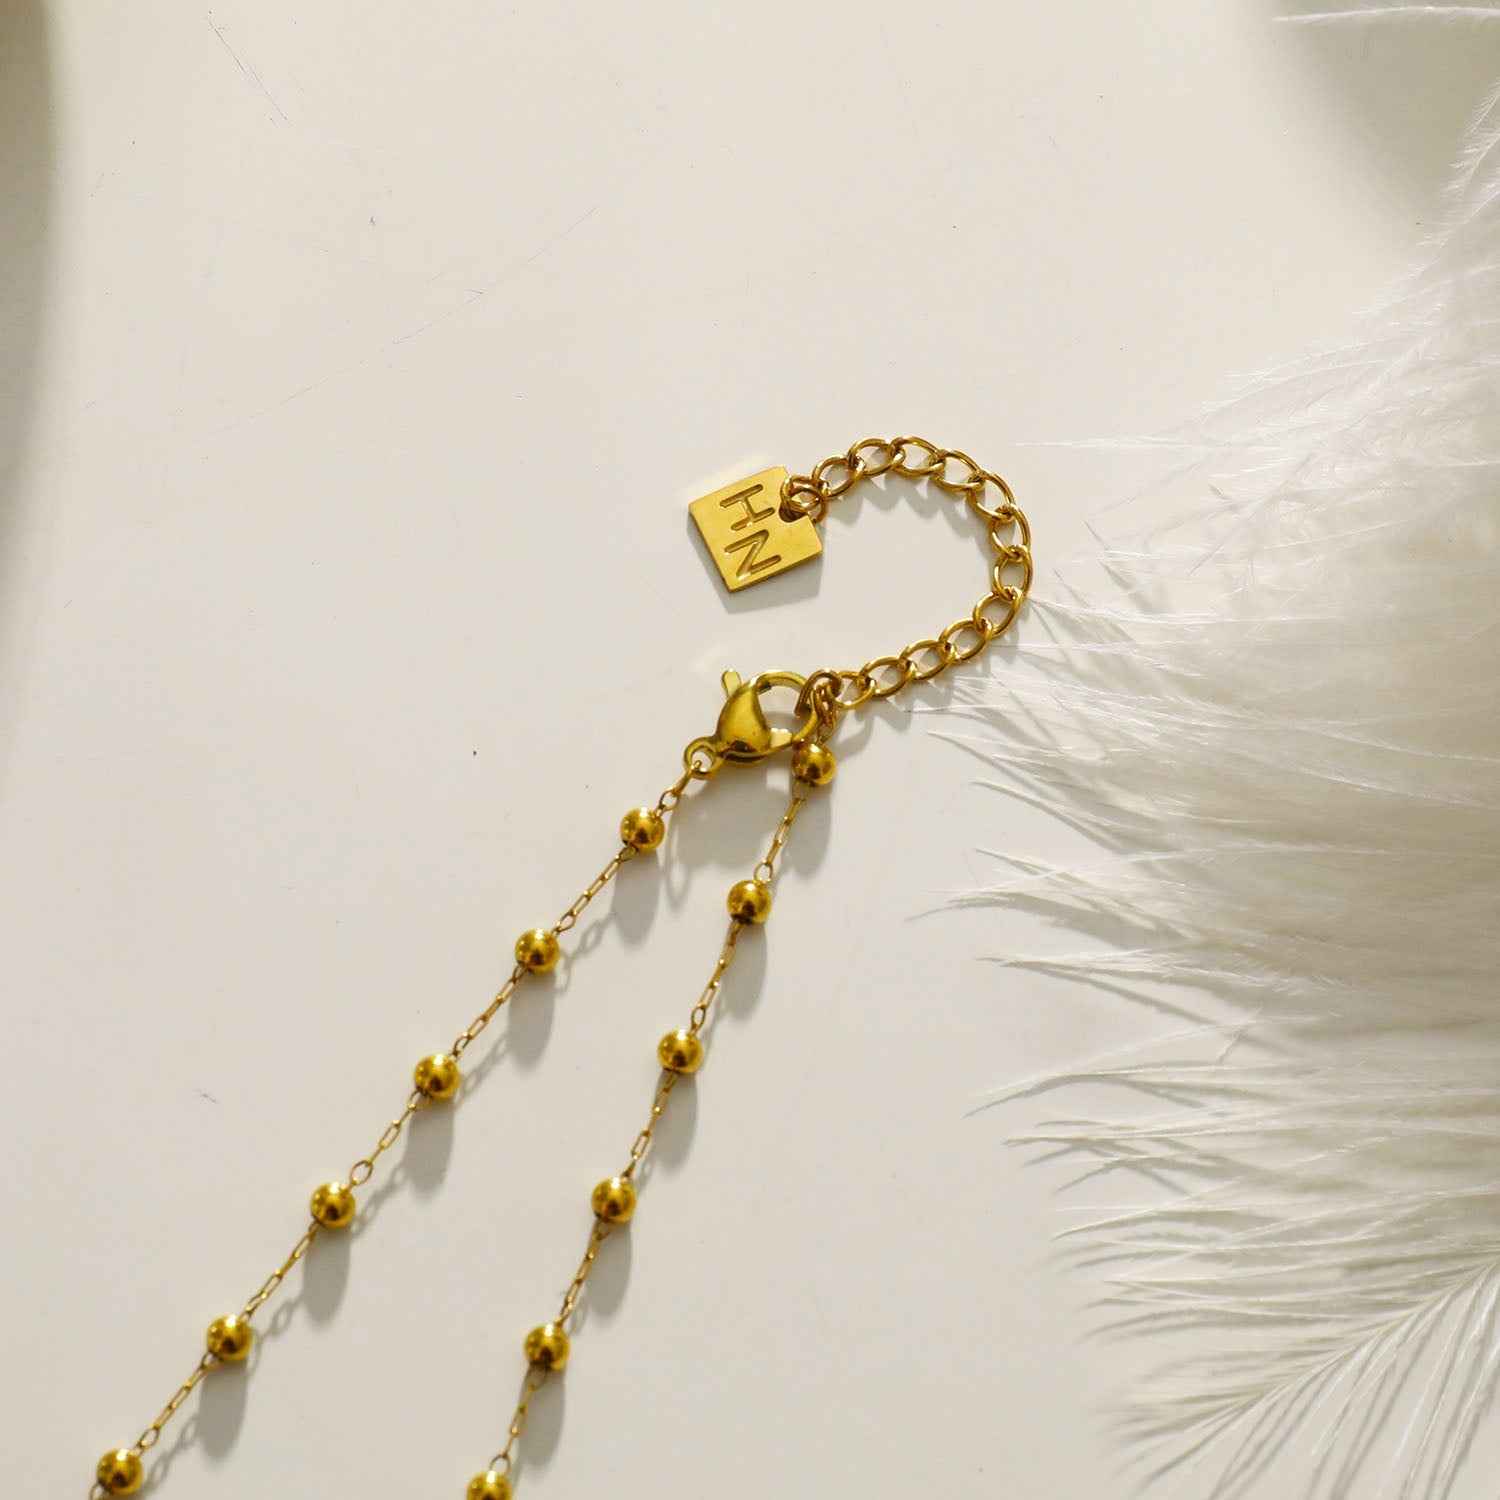 Hackney Nine SANTA CRUZ Black Onyx and Gold Beaded Chain Necklace